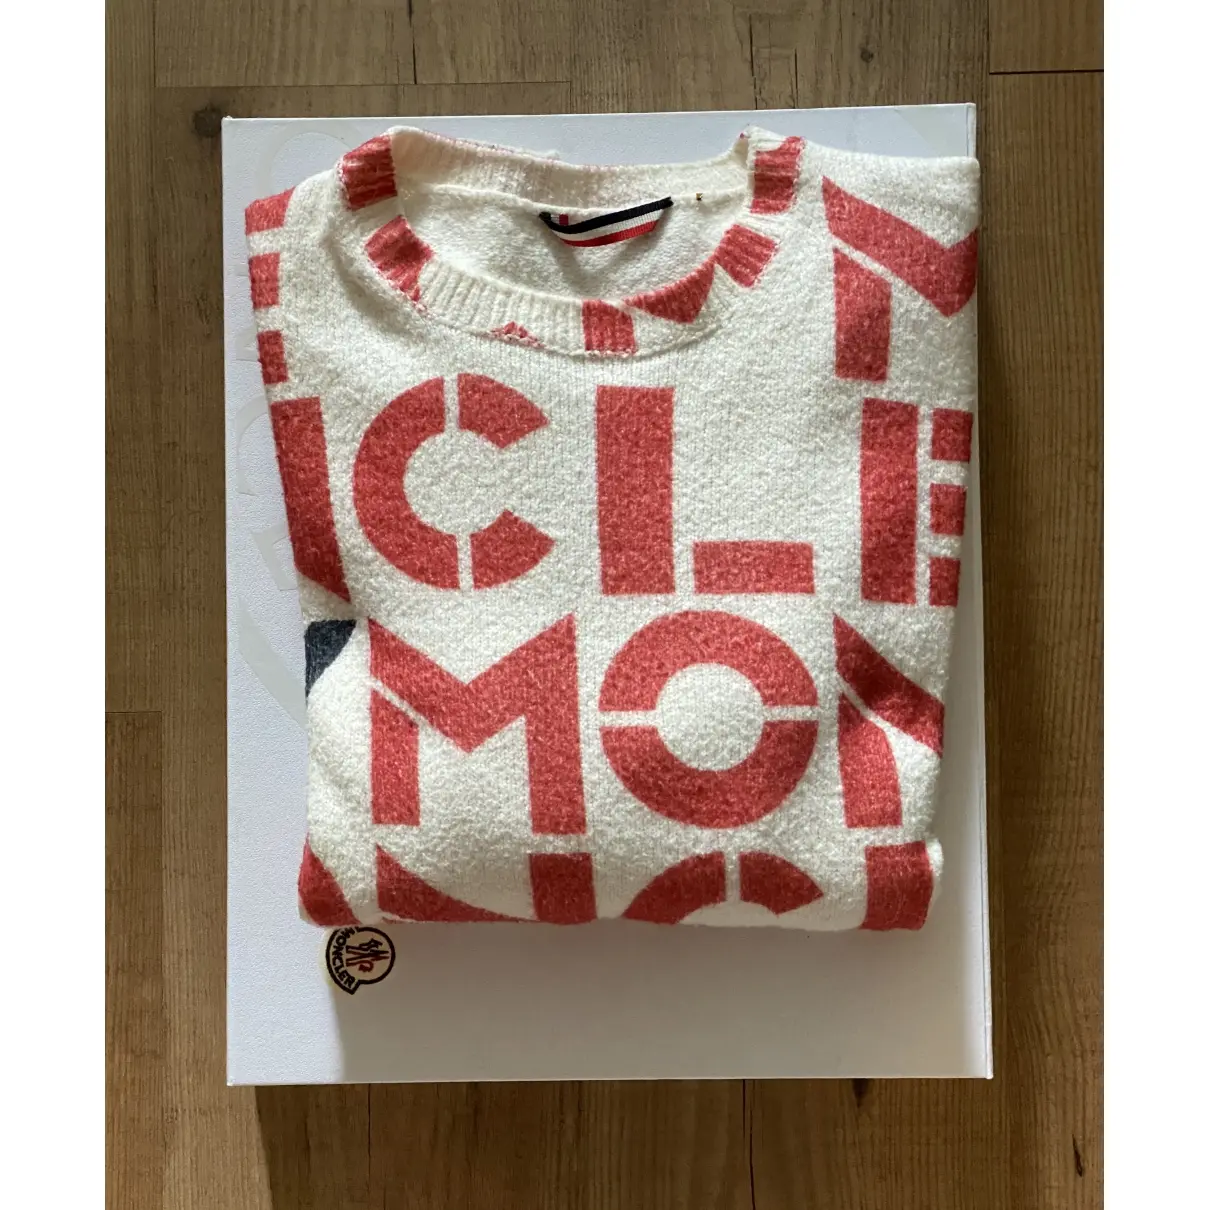 Buy Moncler Genius Ecru Cotton Knitwear & Sweatshirt Moncler n°2 1952 + Valextra online